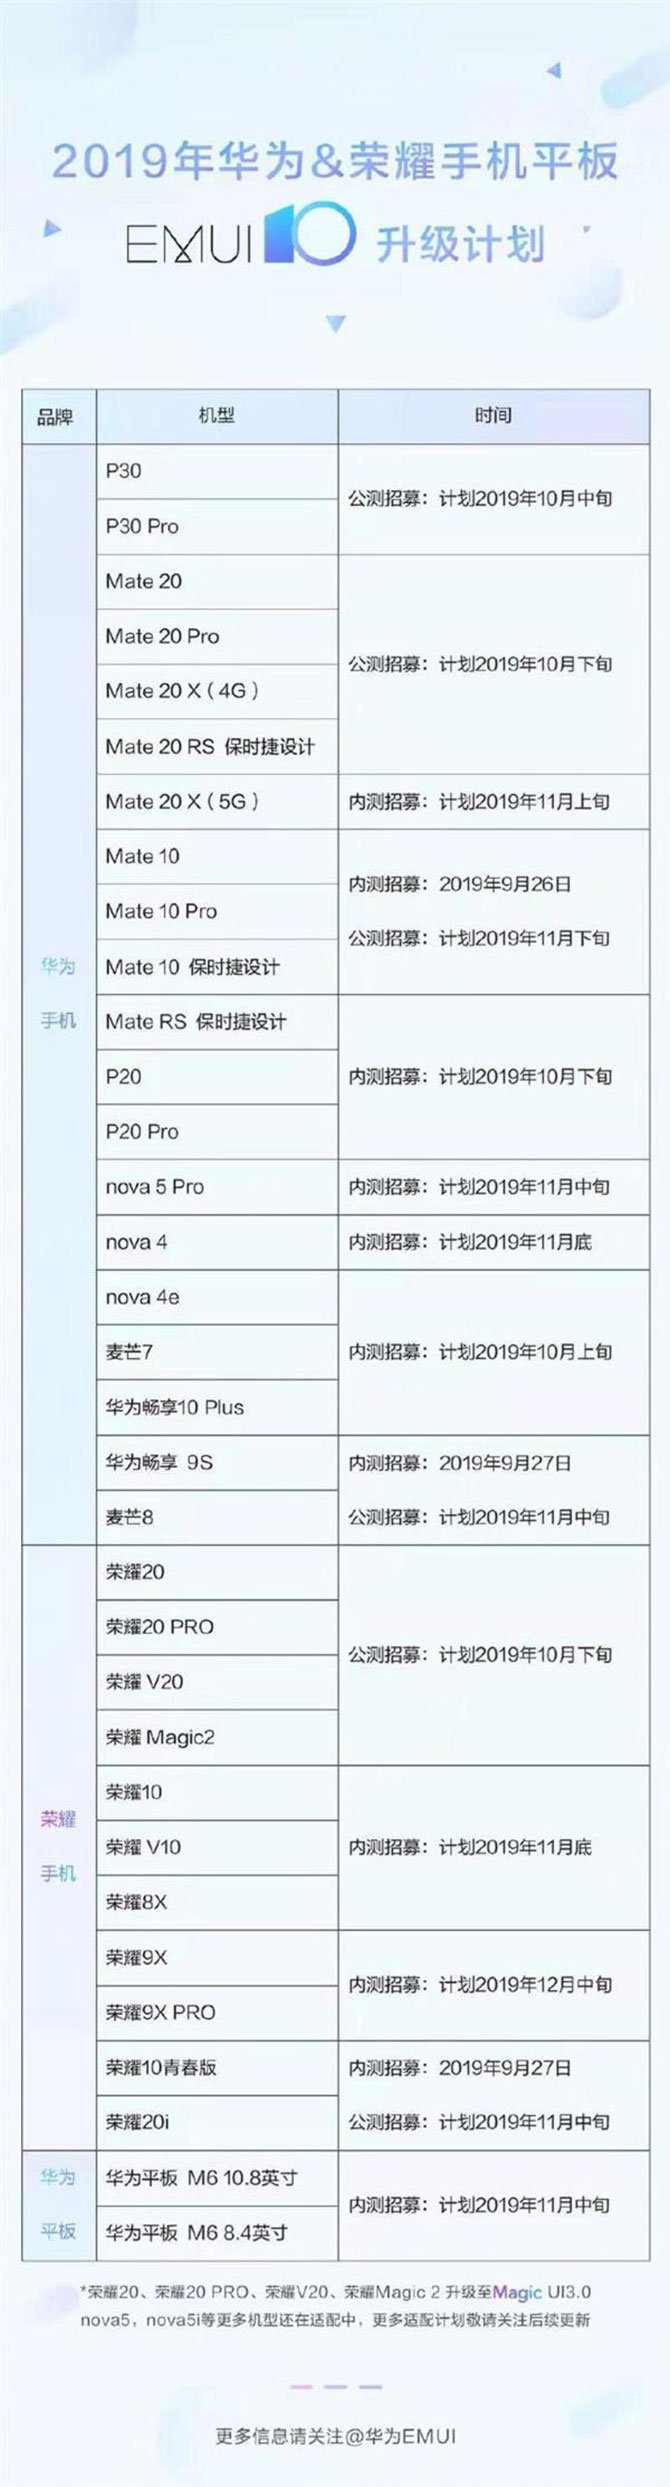 ستصدر Huawei EMUI 10 إلى 33 smartphones مختلفة حتى ديسمبر 2